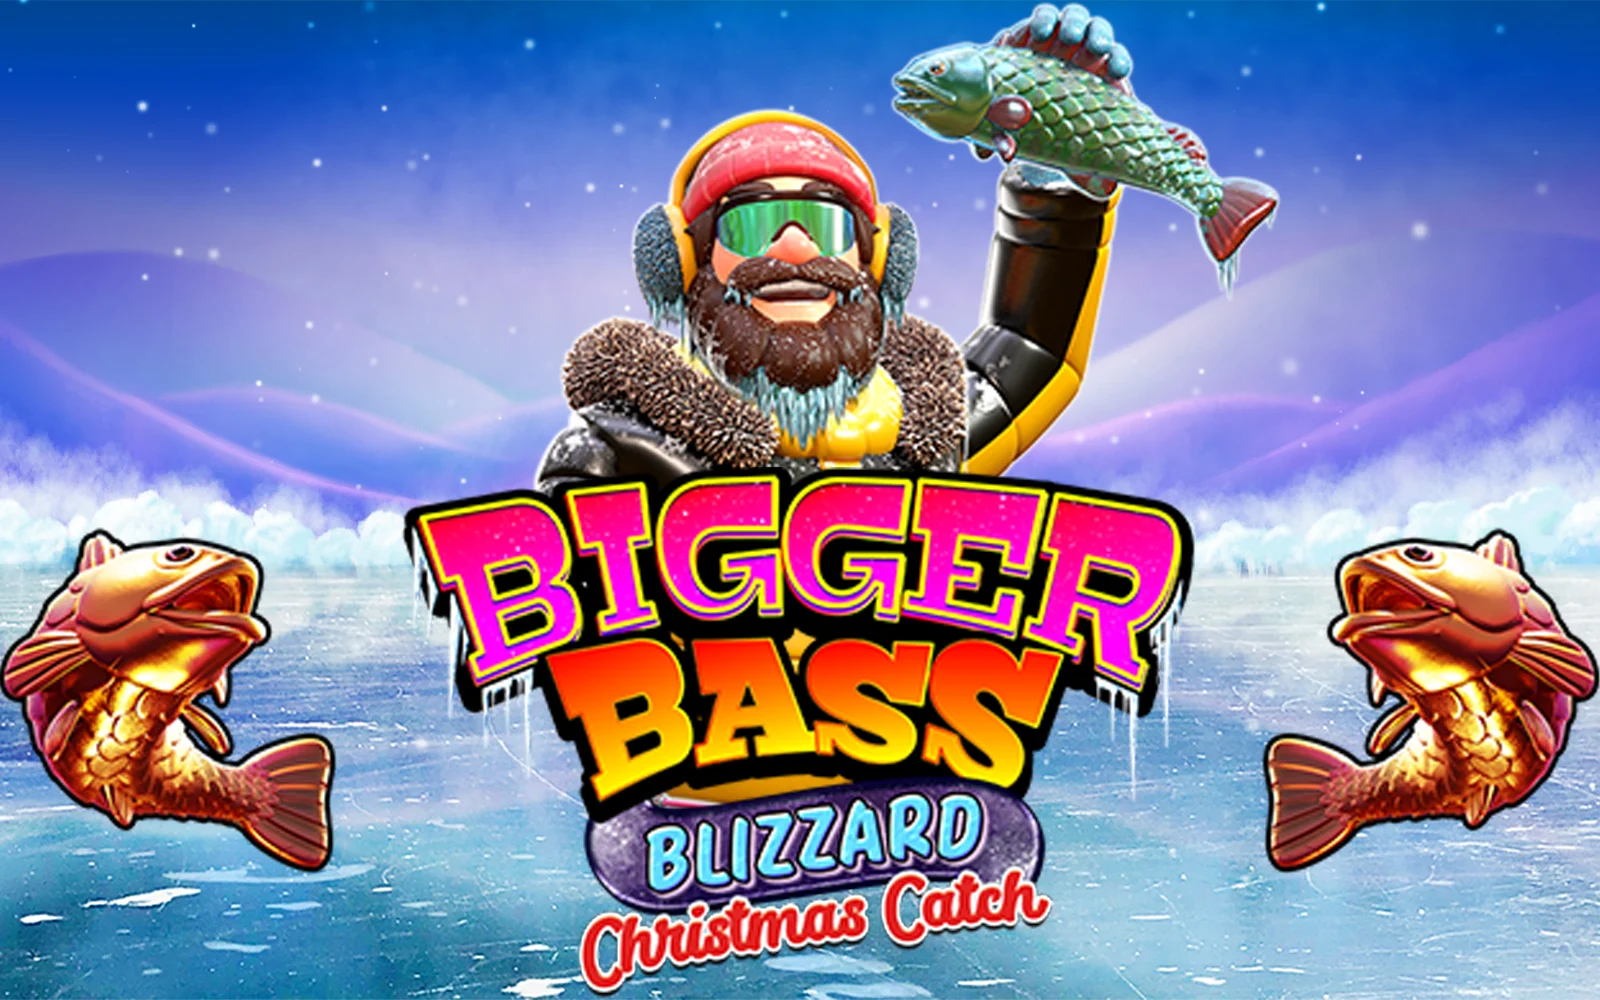 Играйте в Bigger Bass Blizzard - Christmas Catch™ в онлайн-казино Starcasino.be